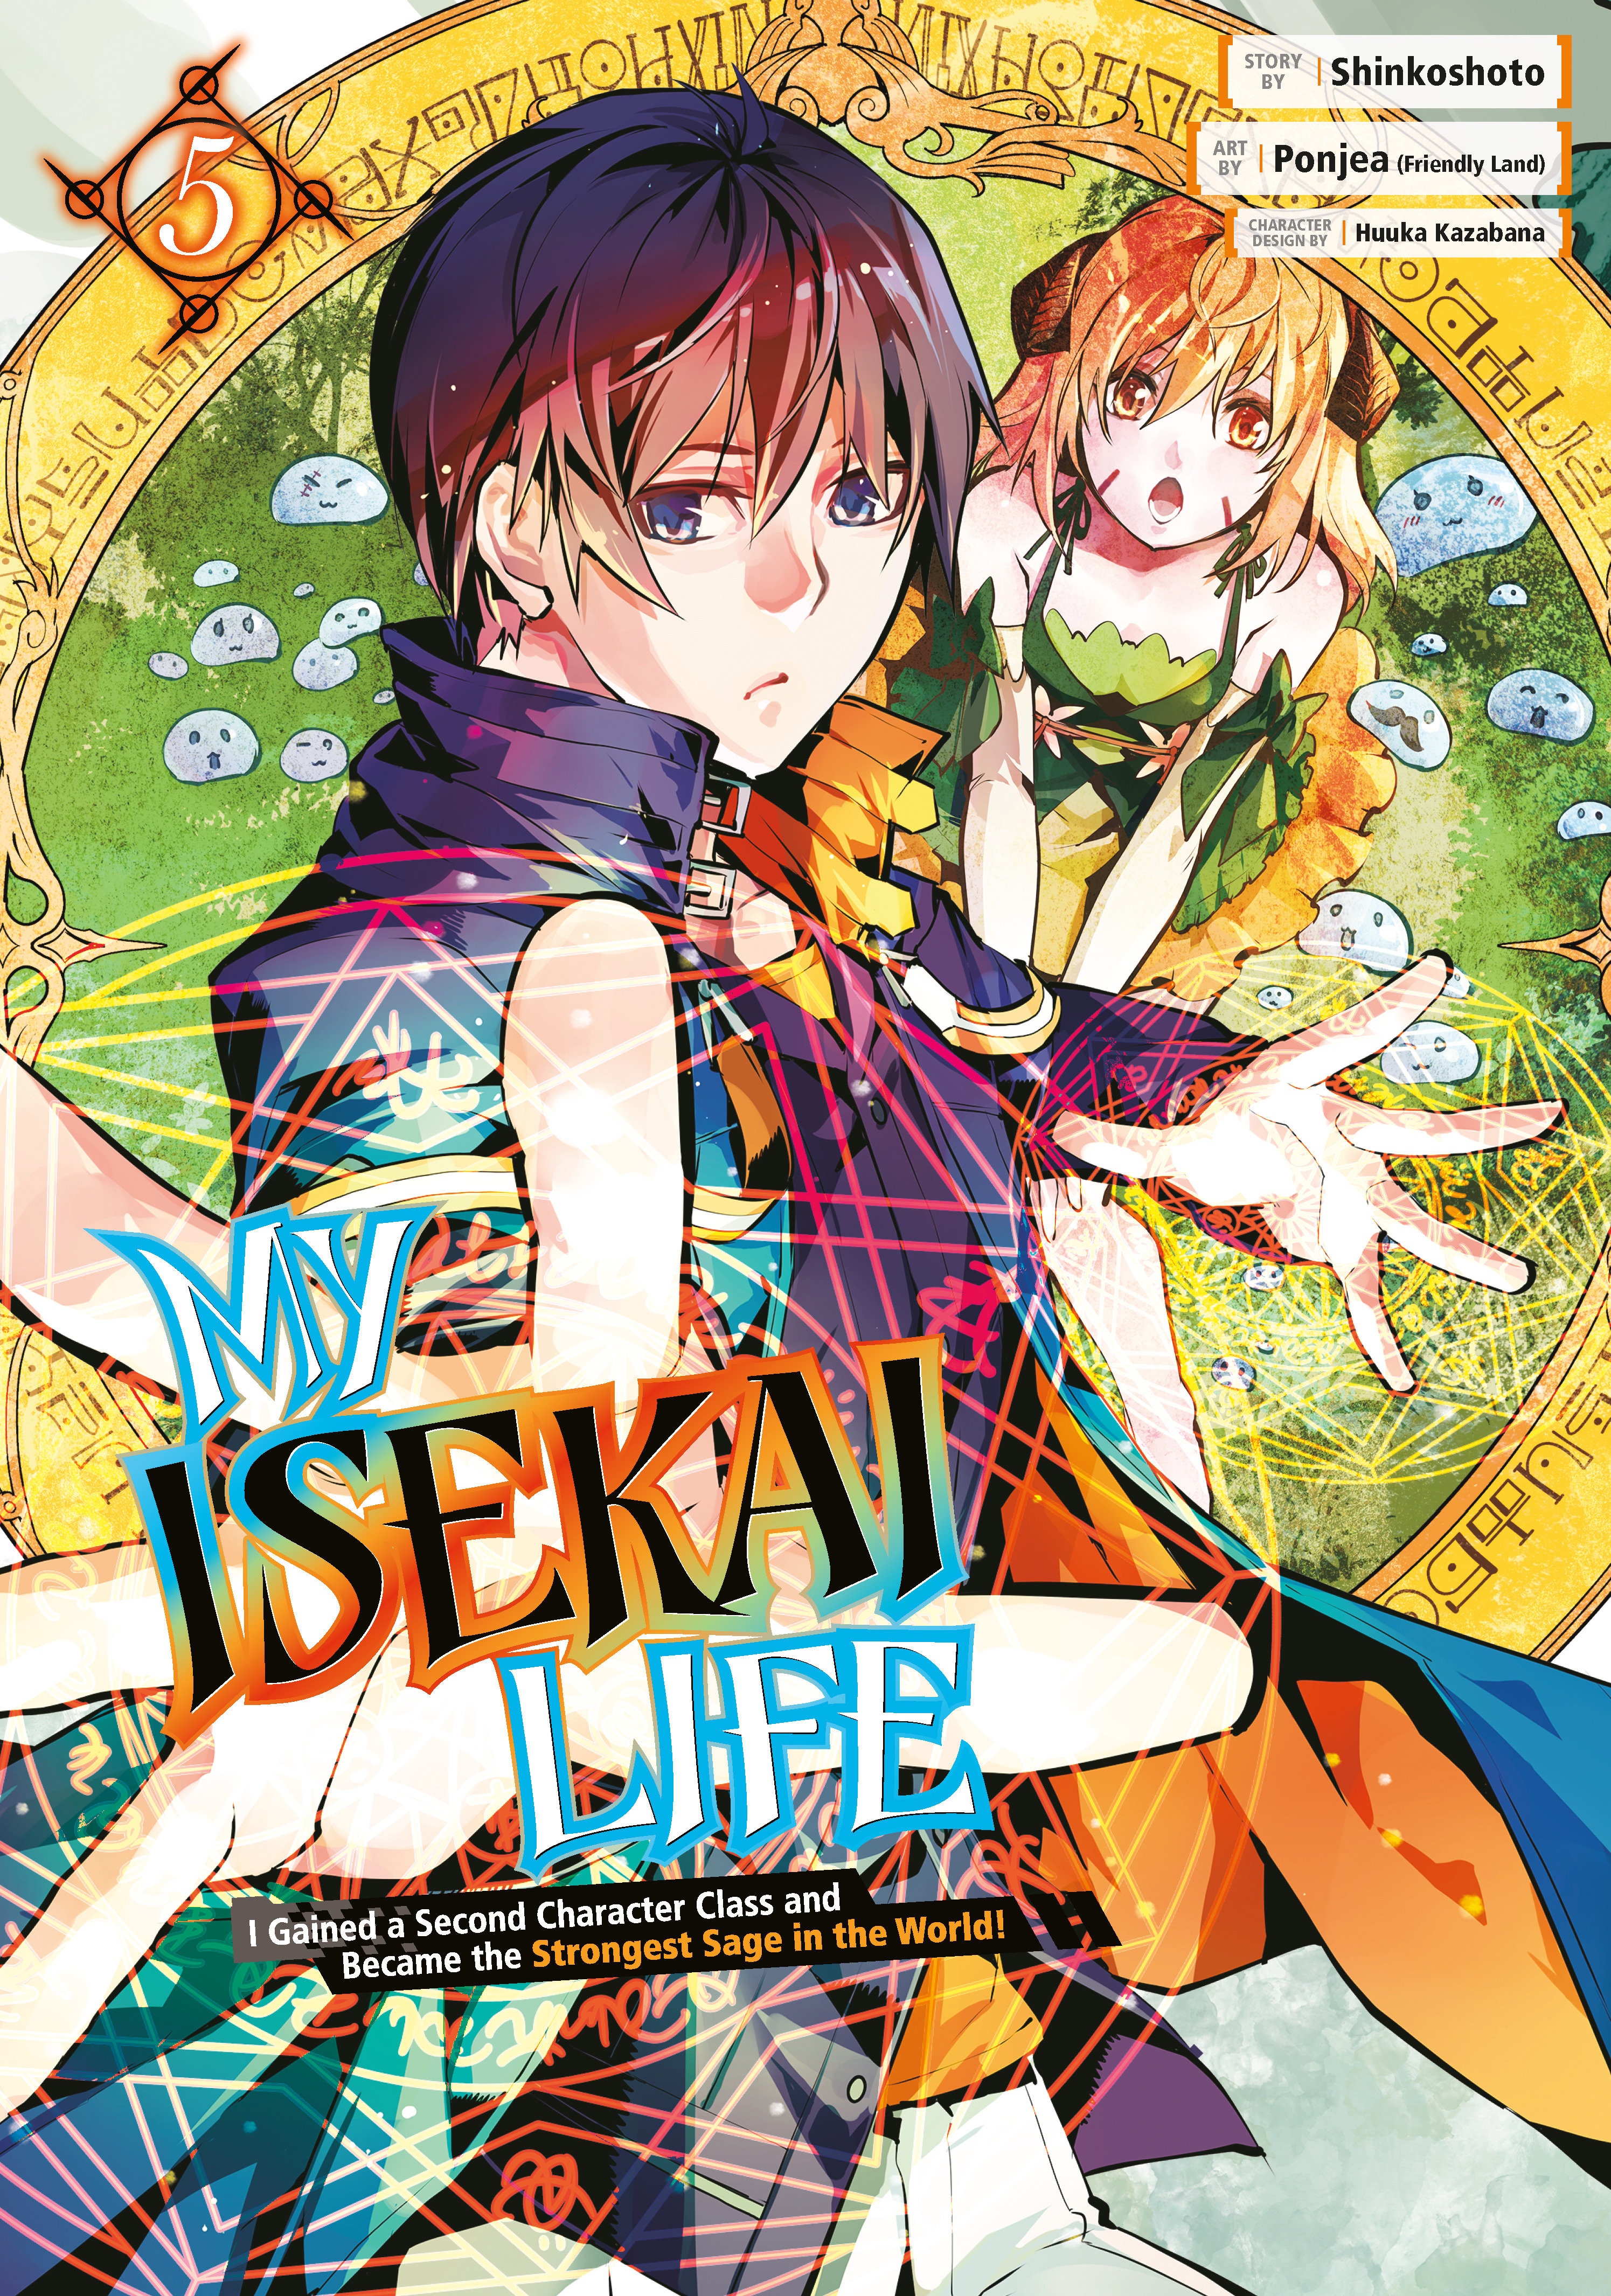 My Isekai Life Manga Volume 5